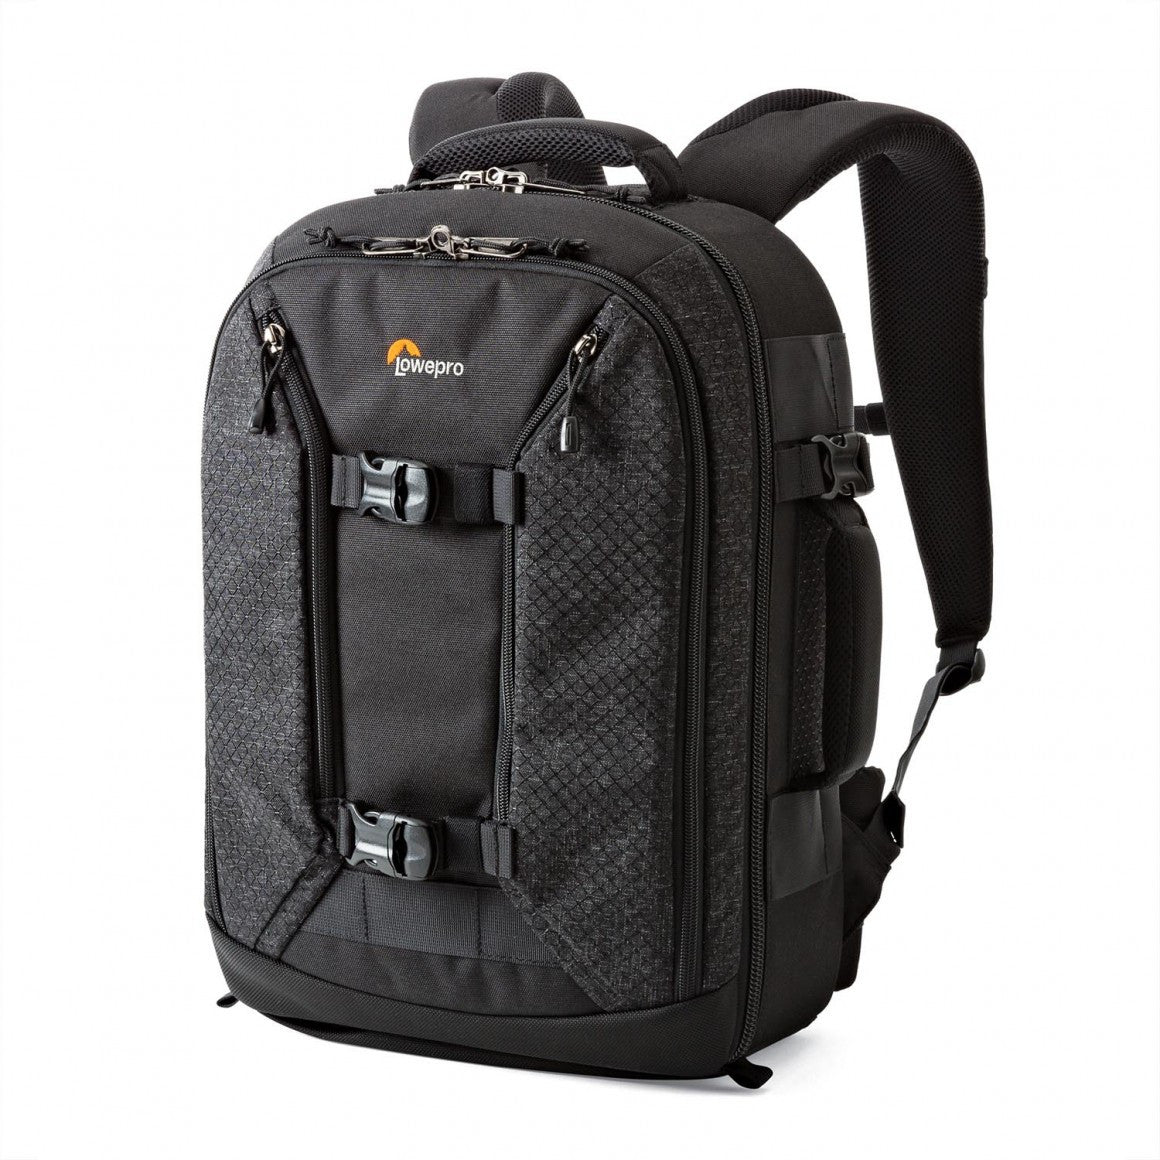 Lowepro Pro Runner 350 AW II Backpack (Black), bags backpacks, Lowepro - Pictureline  - 2